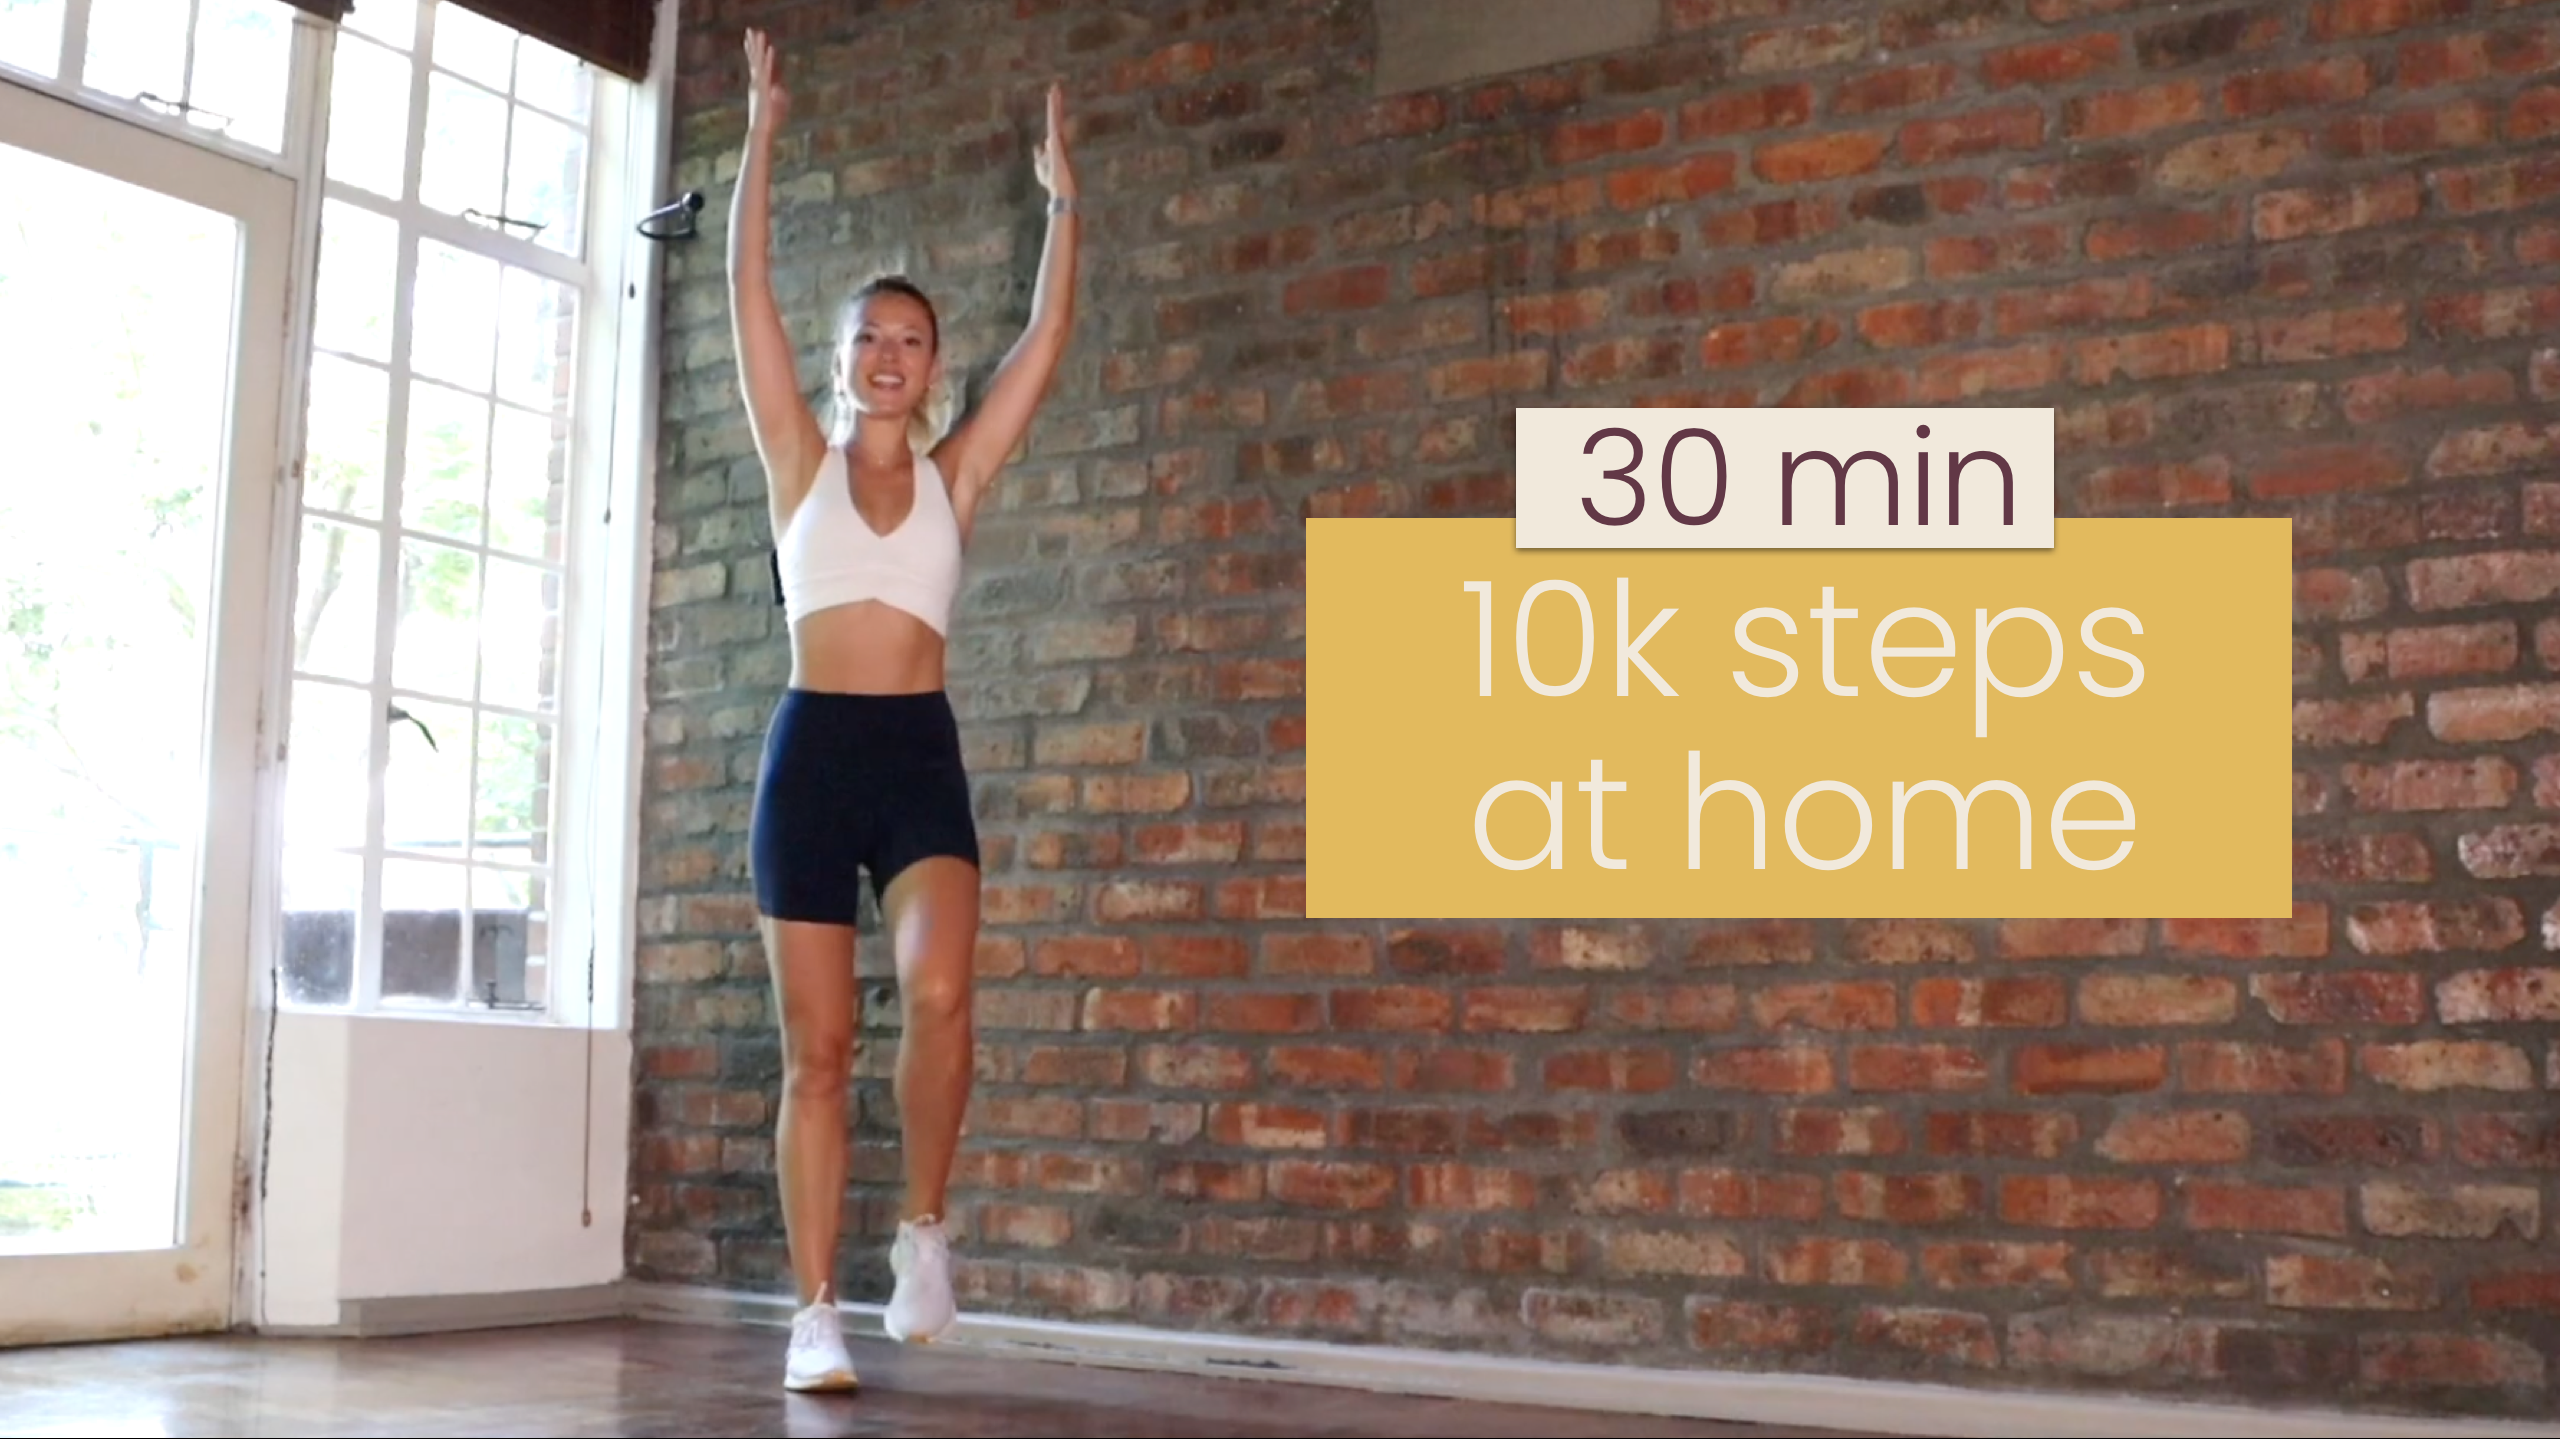 10k steps at home